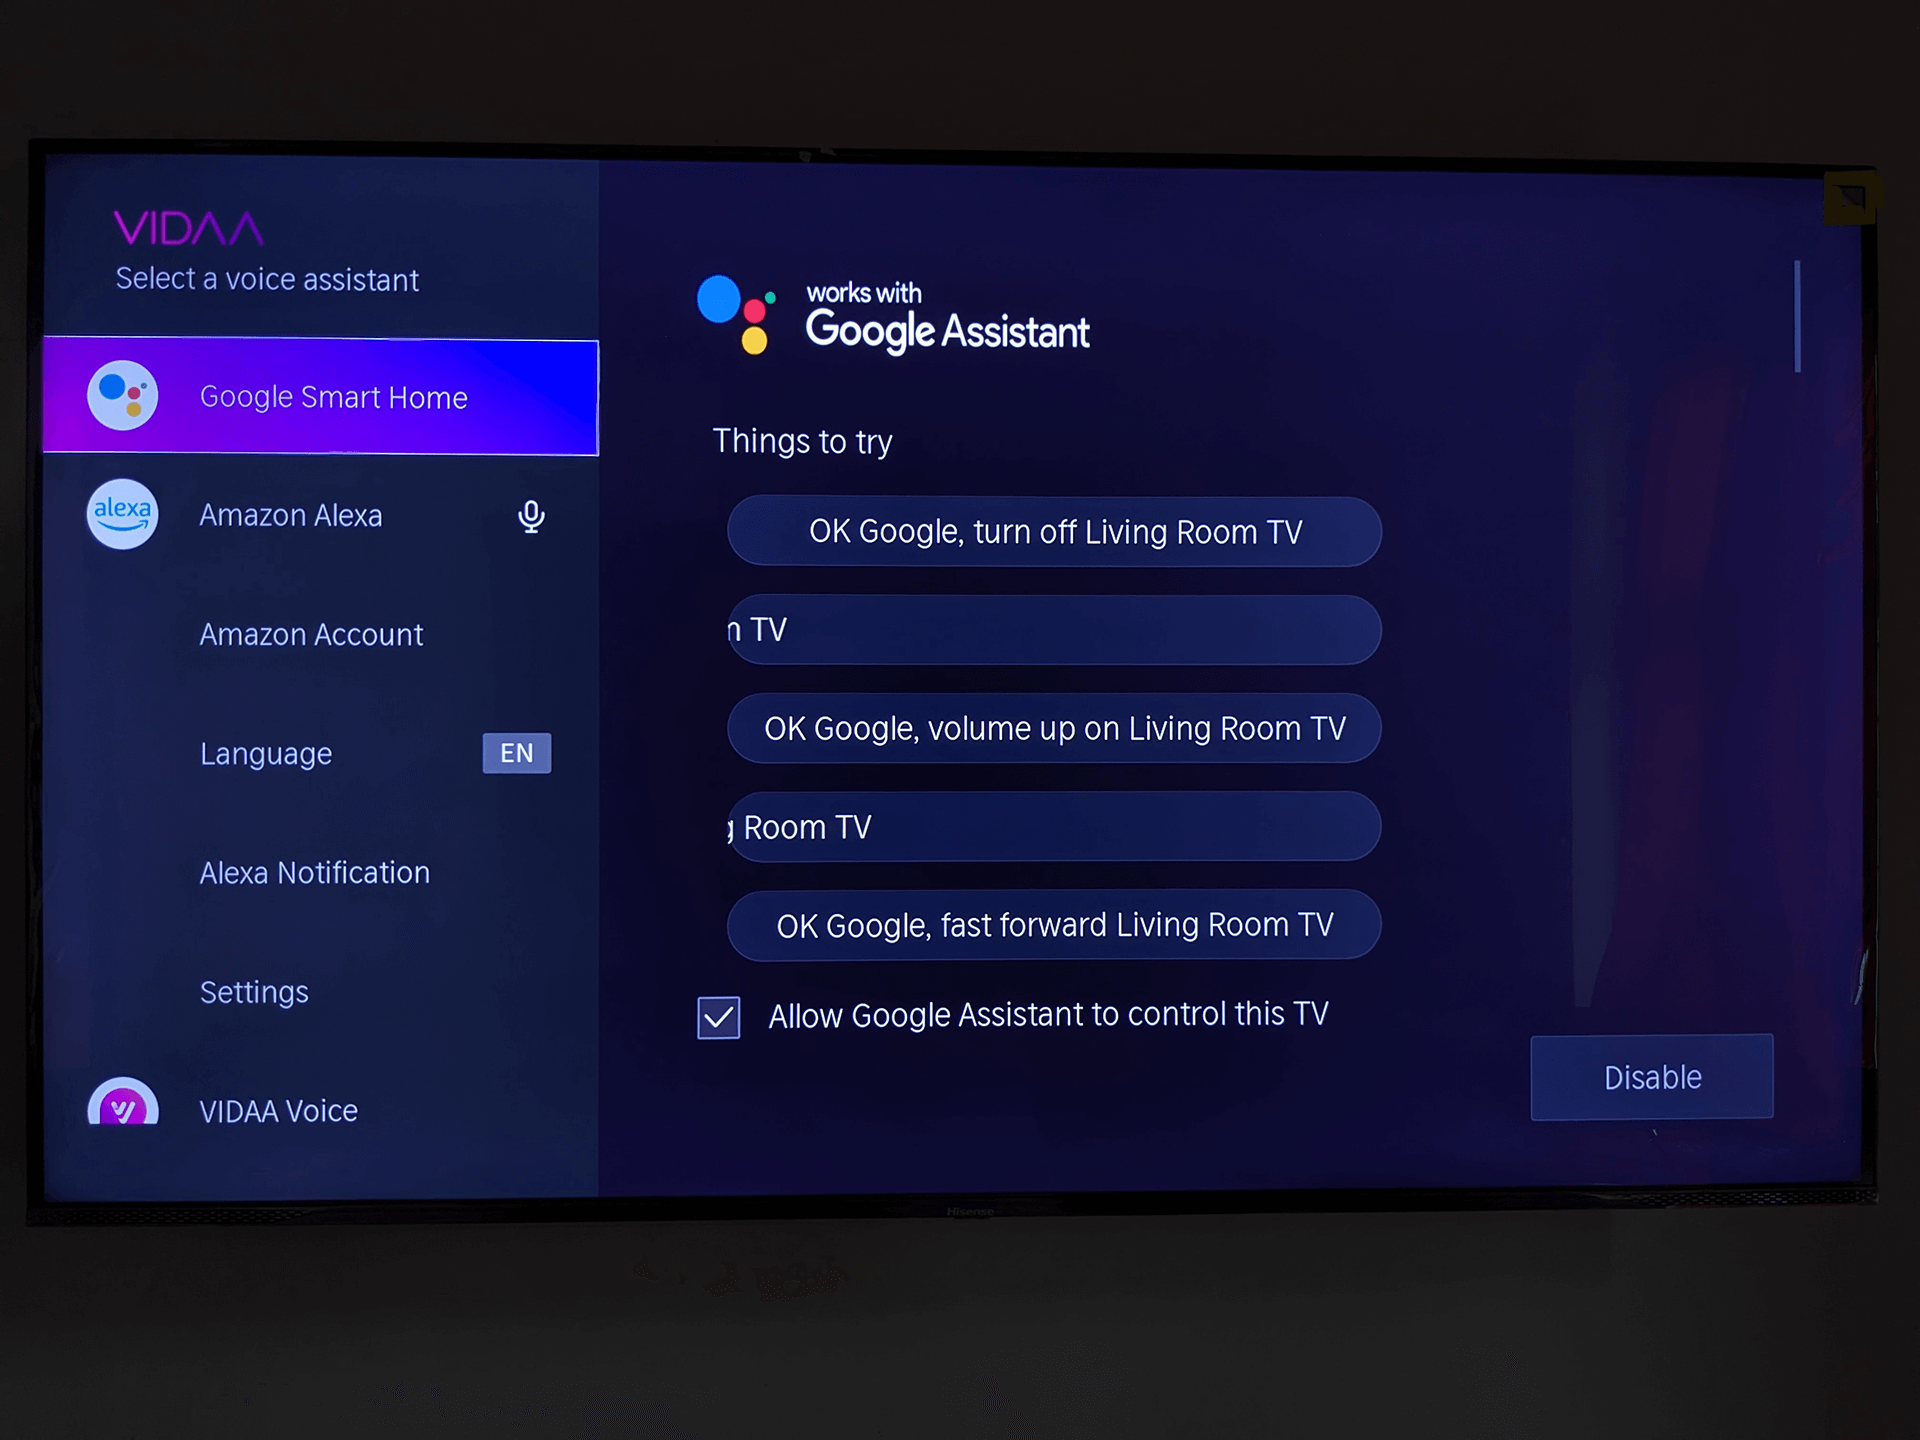 Hisense Tornado E7K Pro QLED Gaming TV's minimalistic remote supports Amazon Alexa and Vidaa Voice